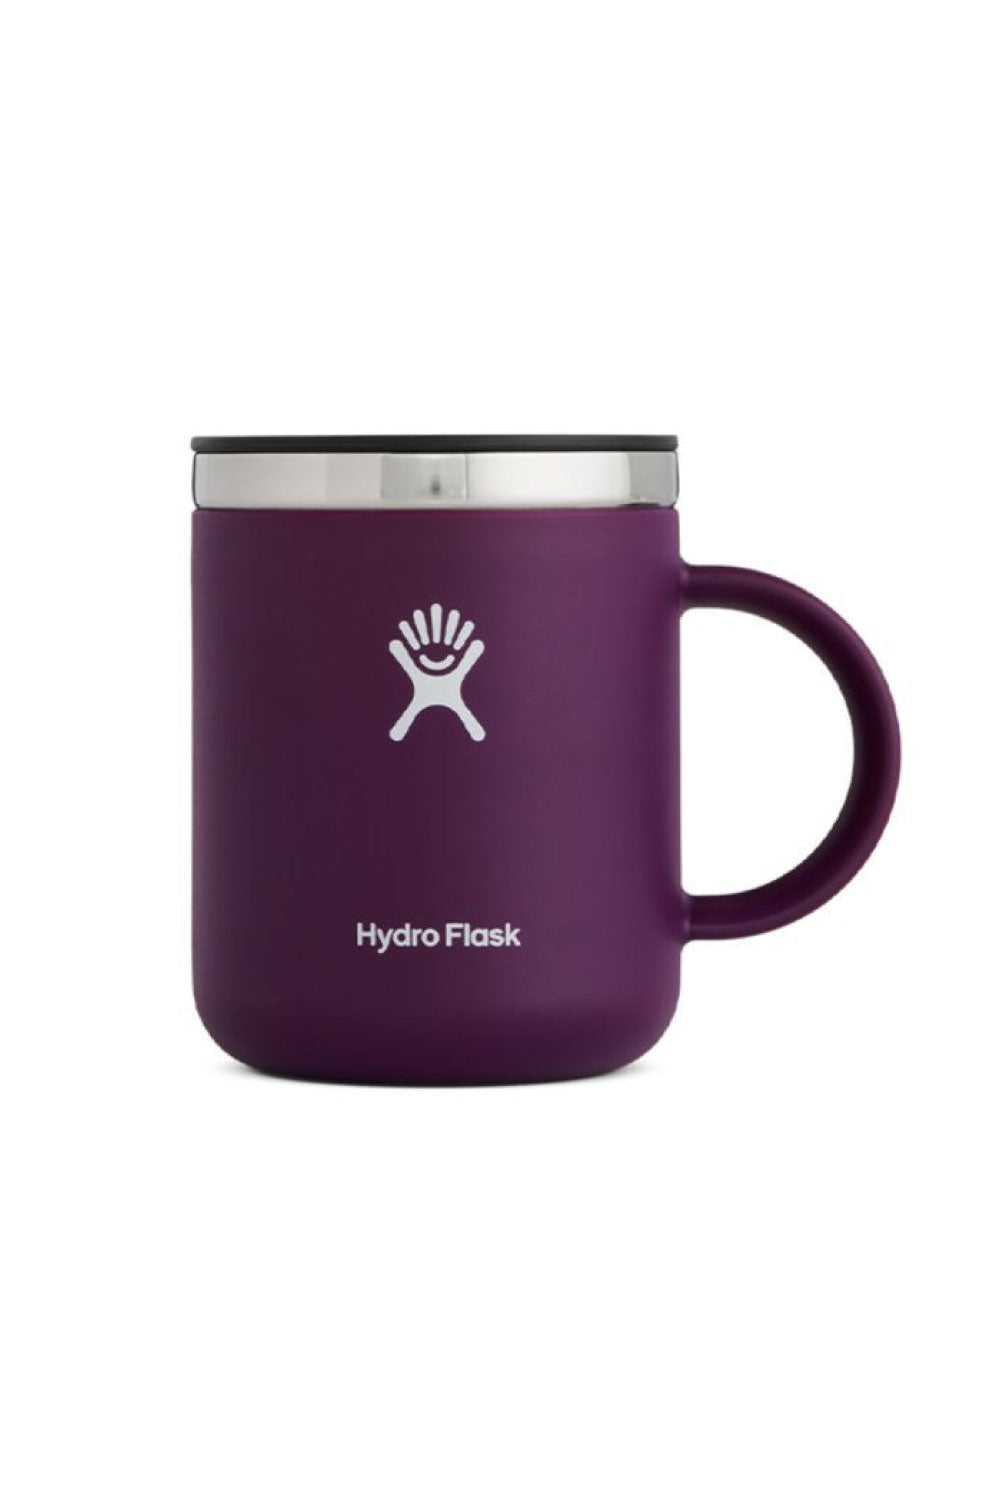 Hydro Flask 12oz (355ml) Coffee Mug